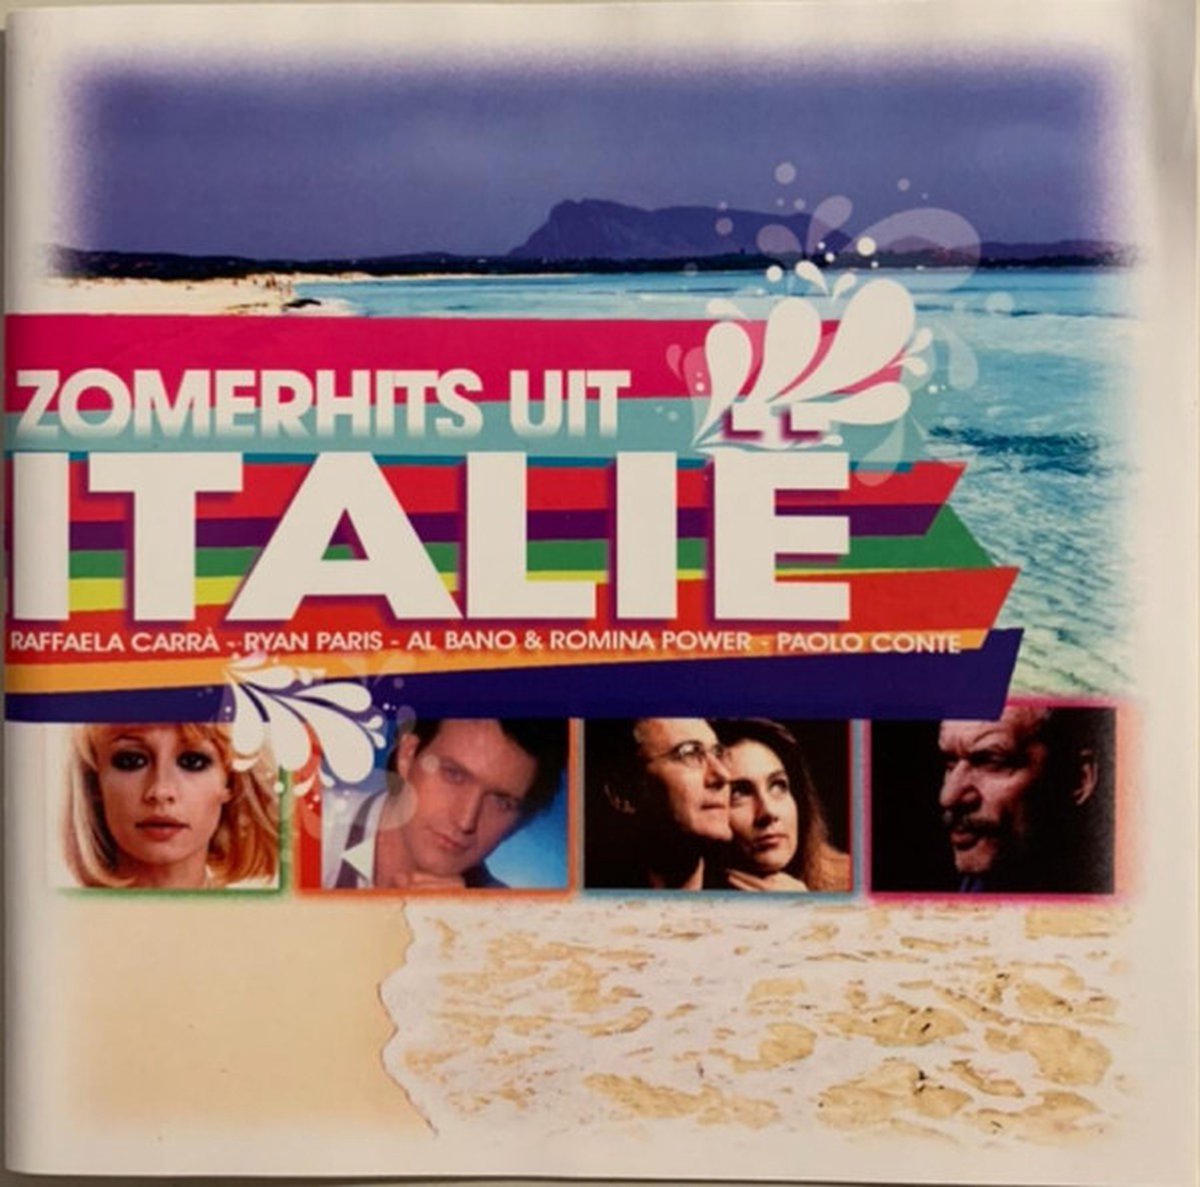 Zomerhits Uit Italië - Cd Album - Ryan Paris, Paolo Conte, Raffaela Carra, Christina, Al Bano & Romina Power - Onbekend